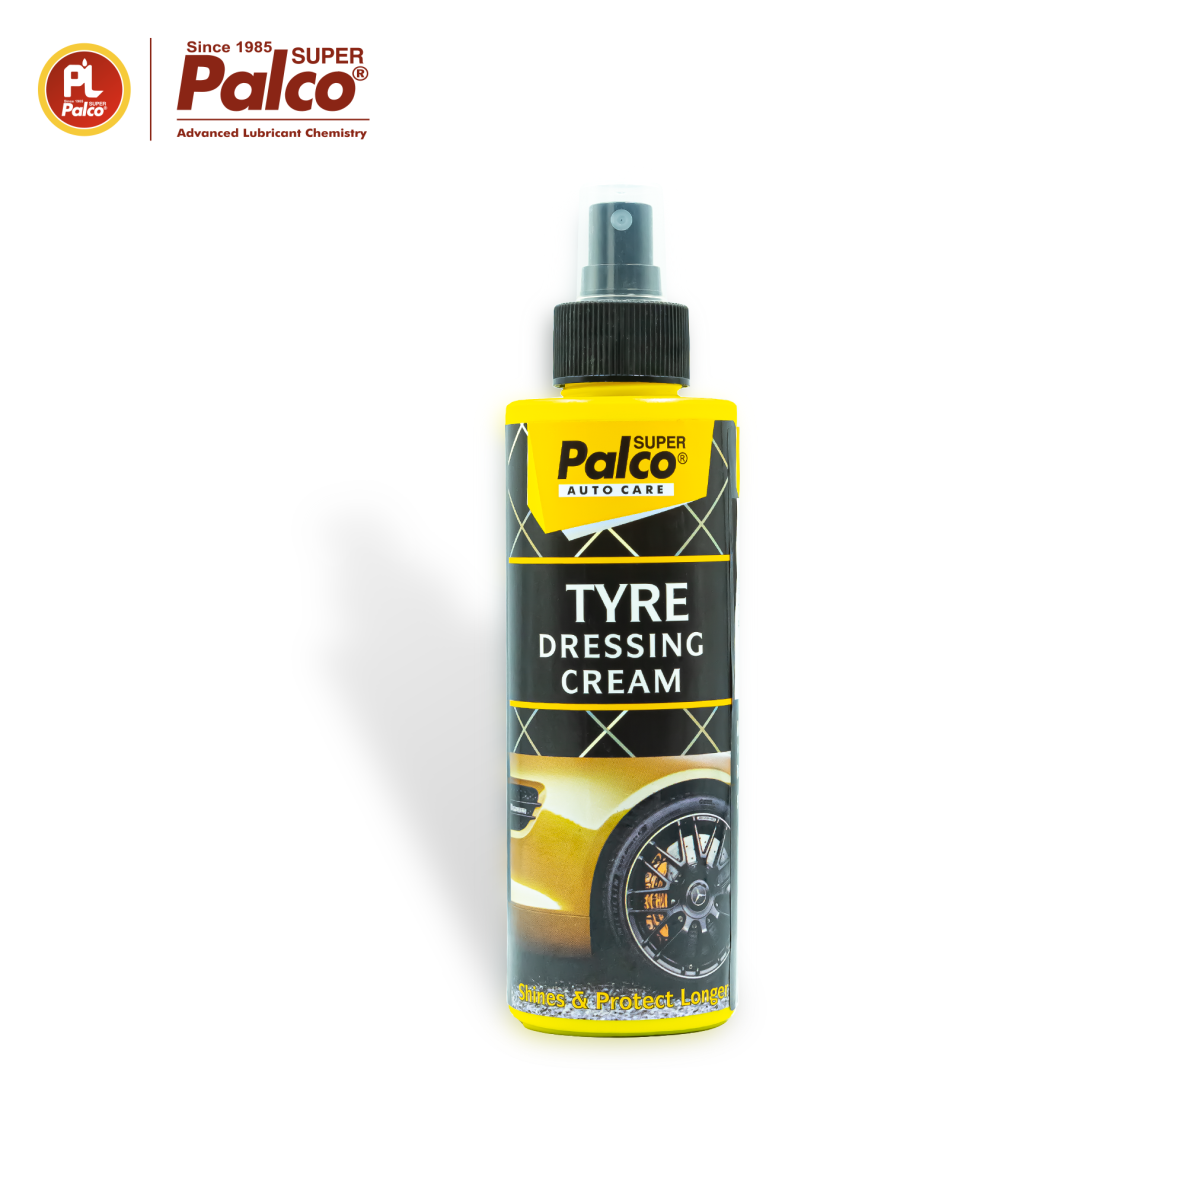 Dung dịch dưỡng lốp xe Palco Tyre Dressing Cream